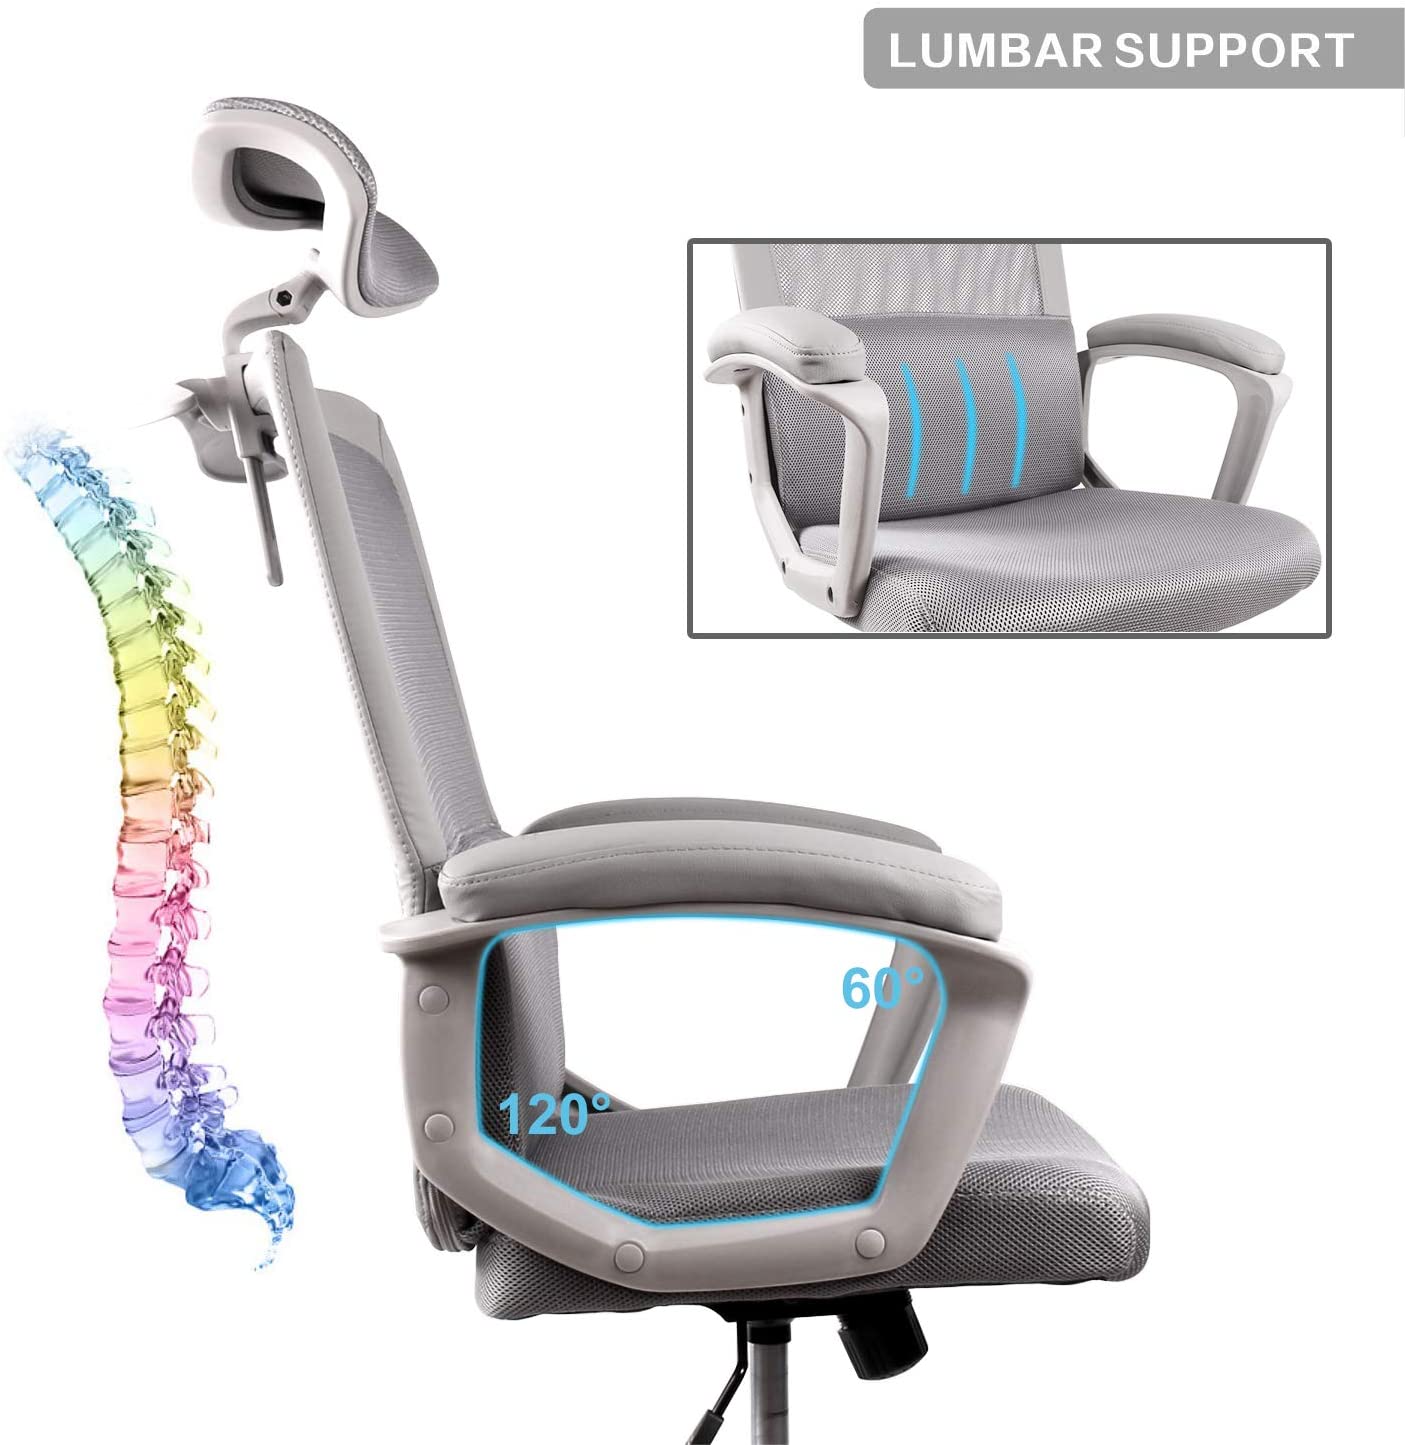 High Back Ergonomic Mesh Desk Office Chair with Padding Armrest and Adjustable Headrest